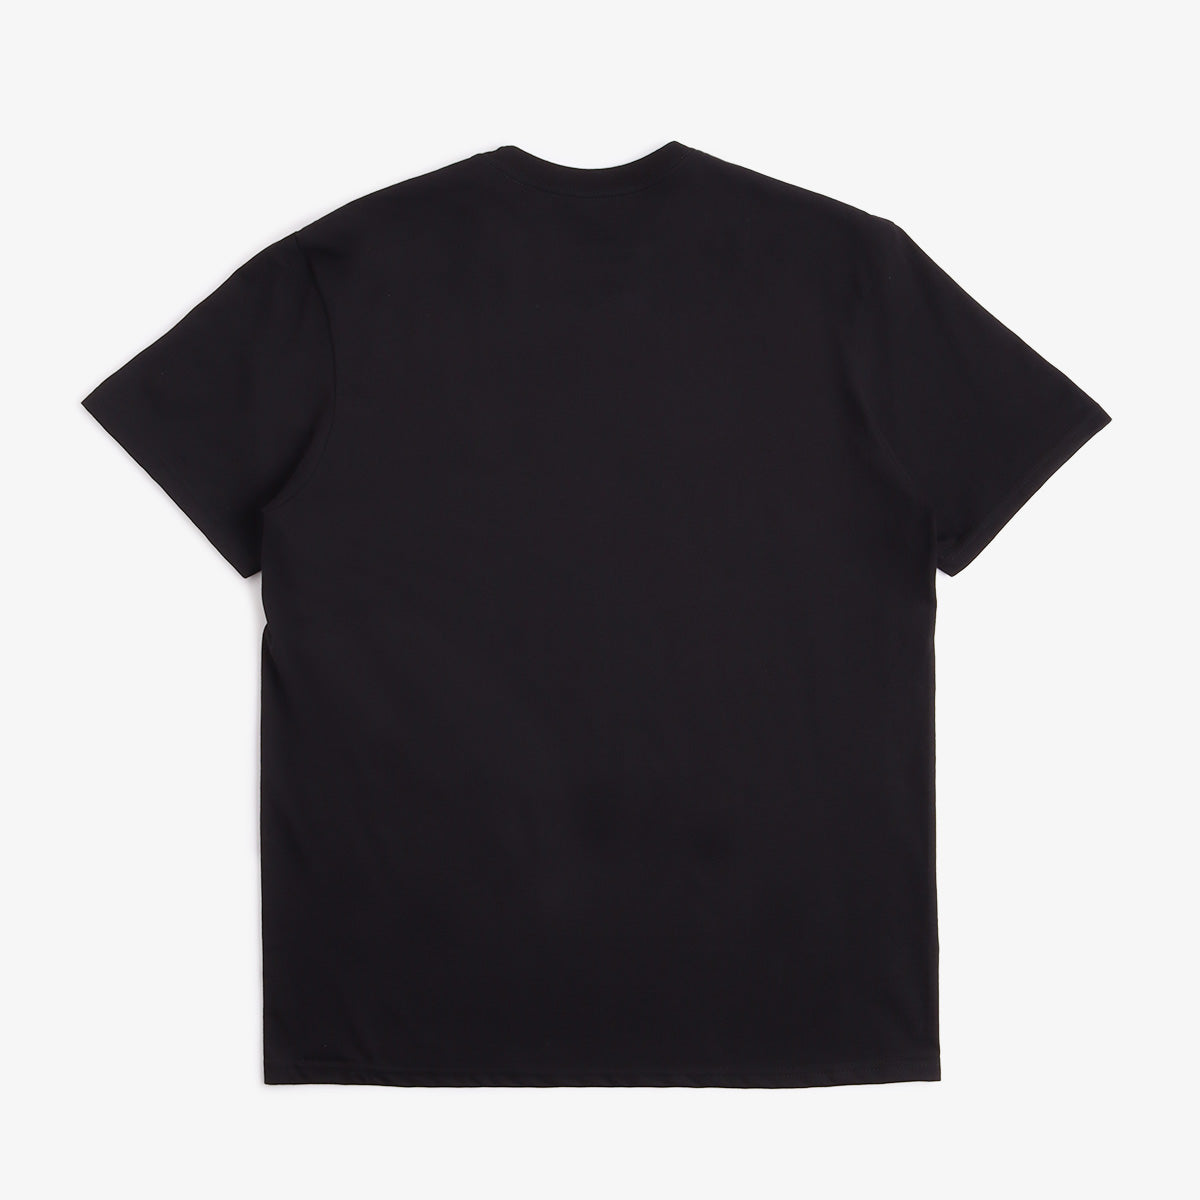 Brixton Builders T-Shirt, Black, Detail Shot 3